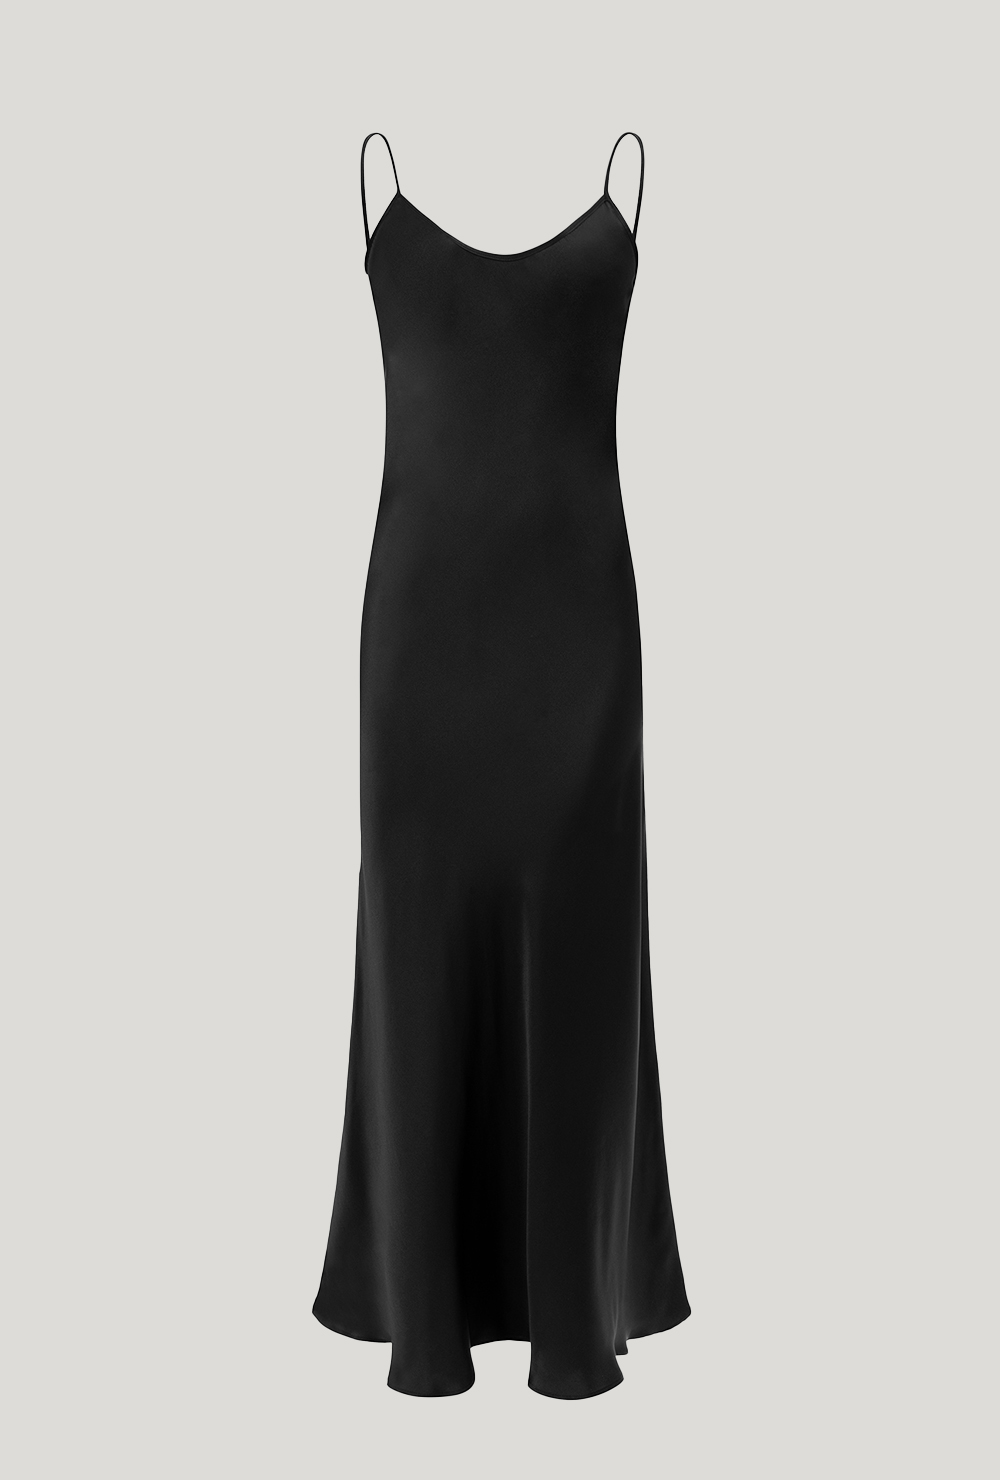 Silk maxi black dress with deep neckline on the back